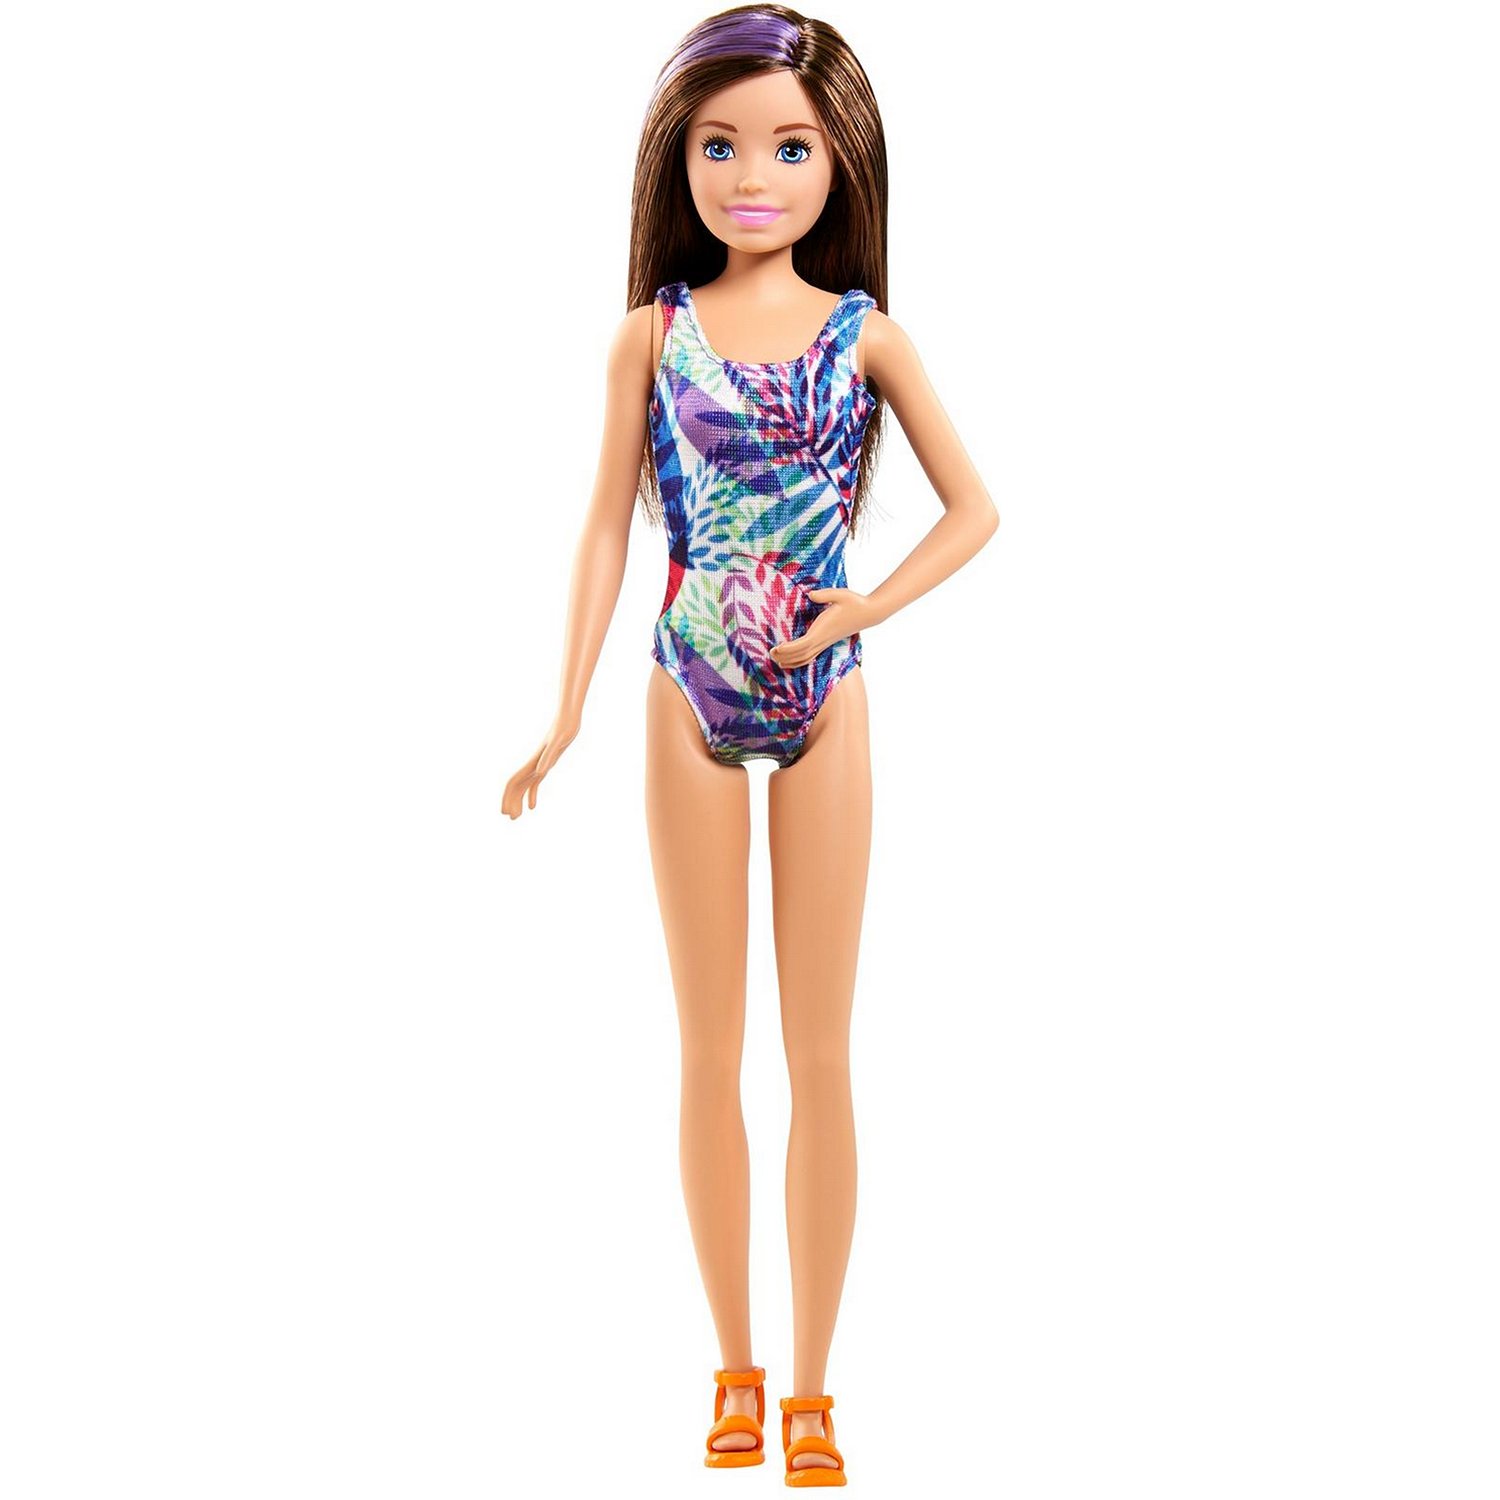 Набор Barbie Скиппер с питомцем и аксессуарами GRT88